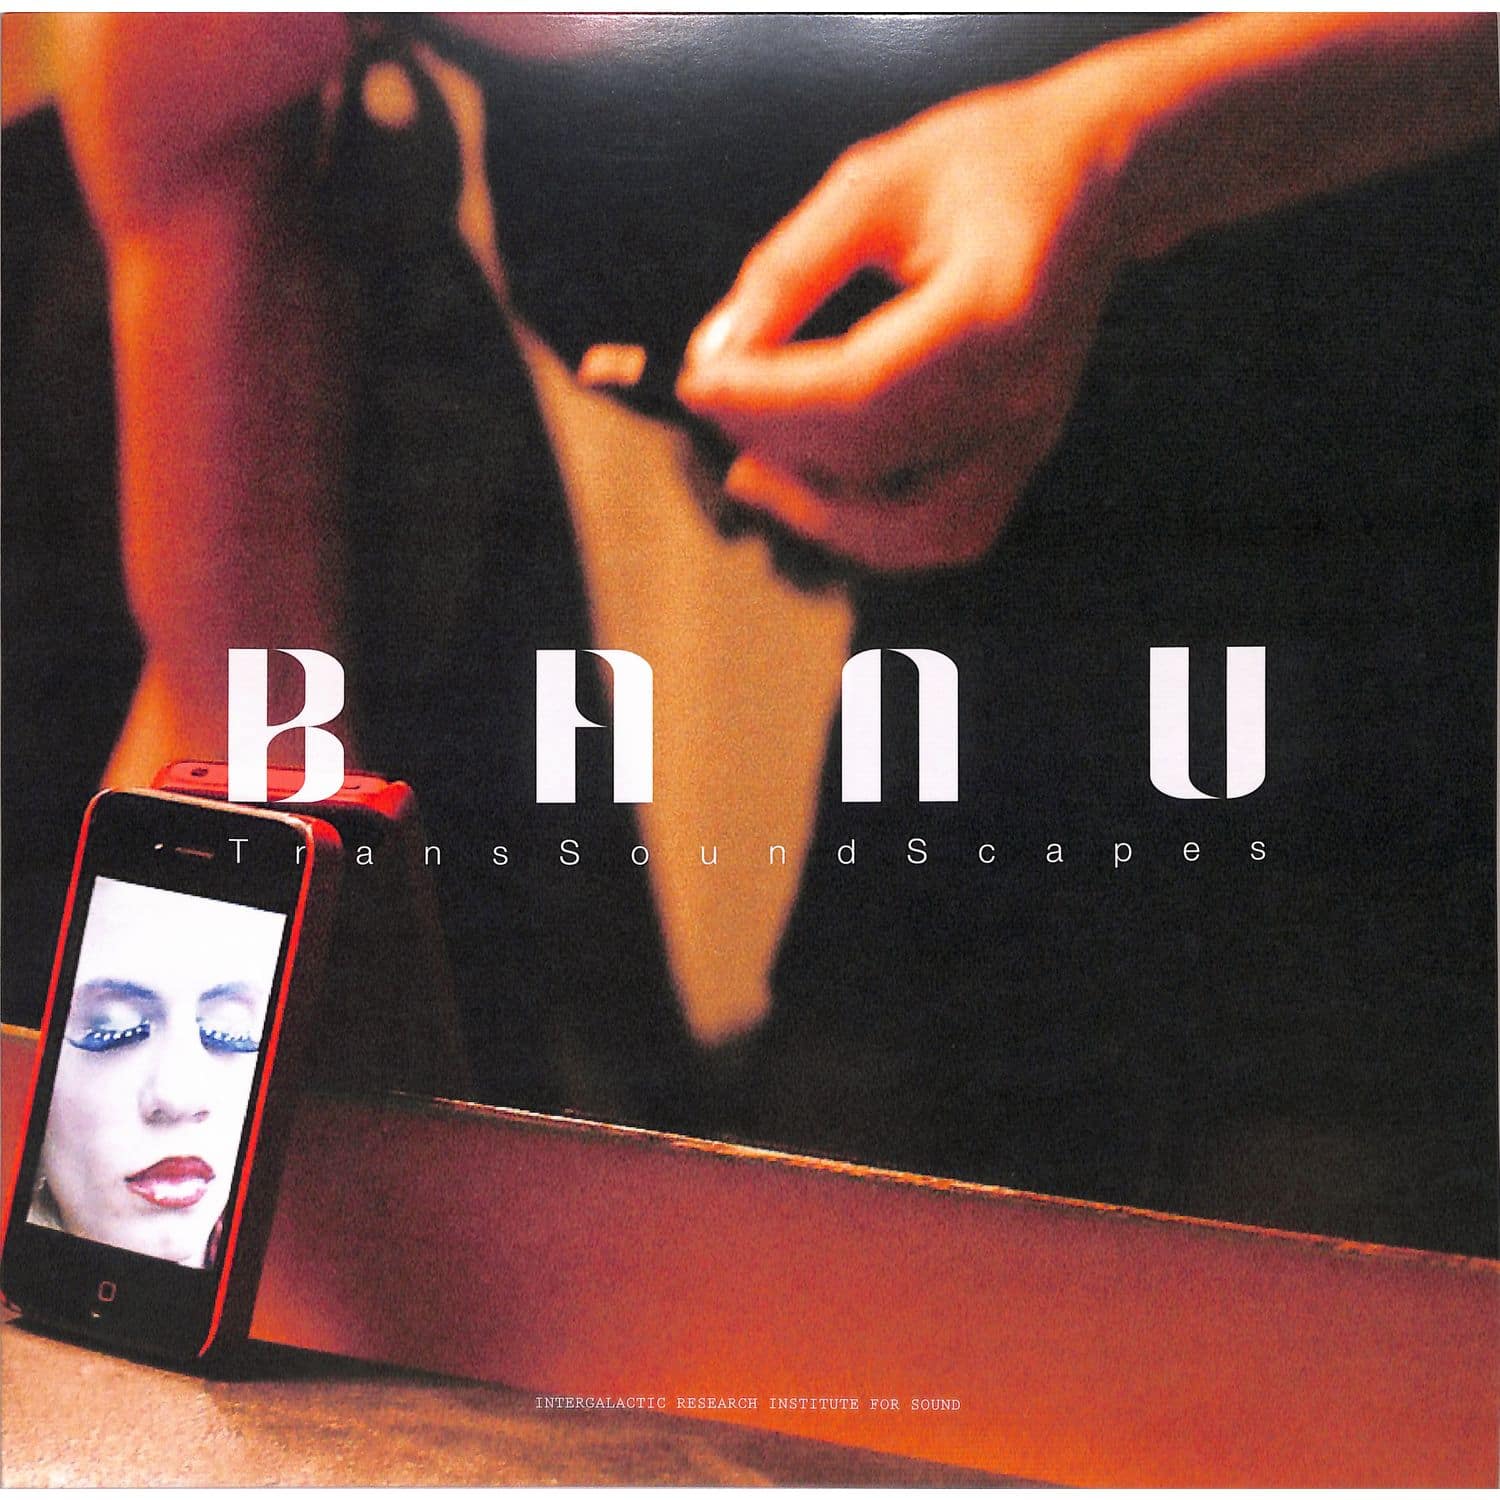 Banu - TRANSSOUNDSCAPES LP